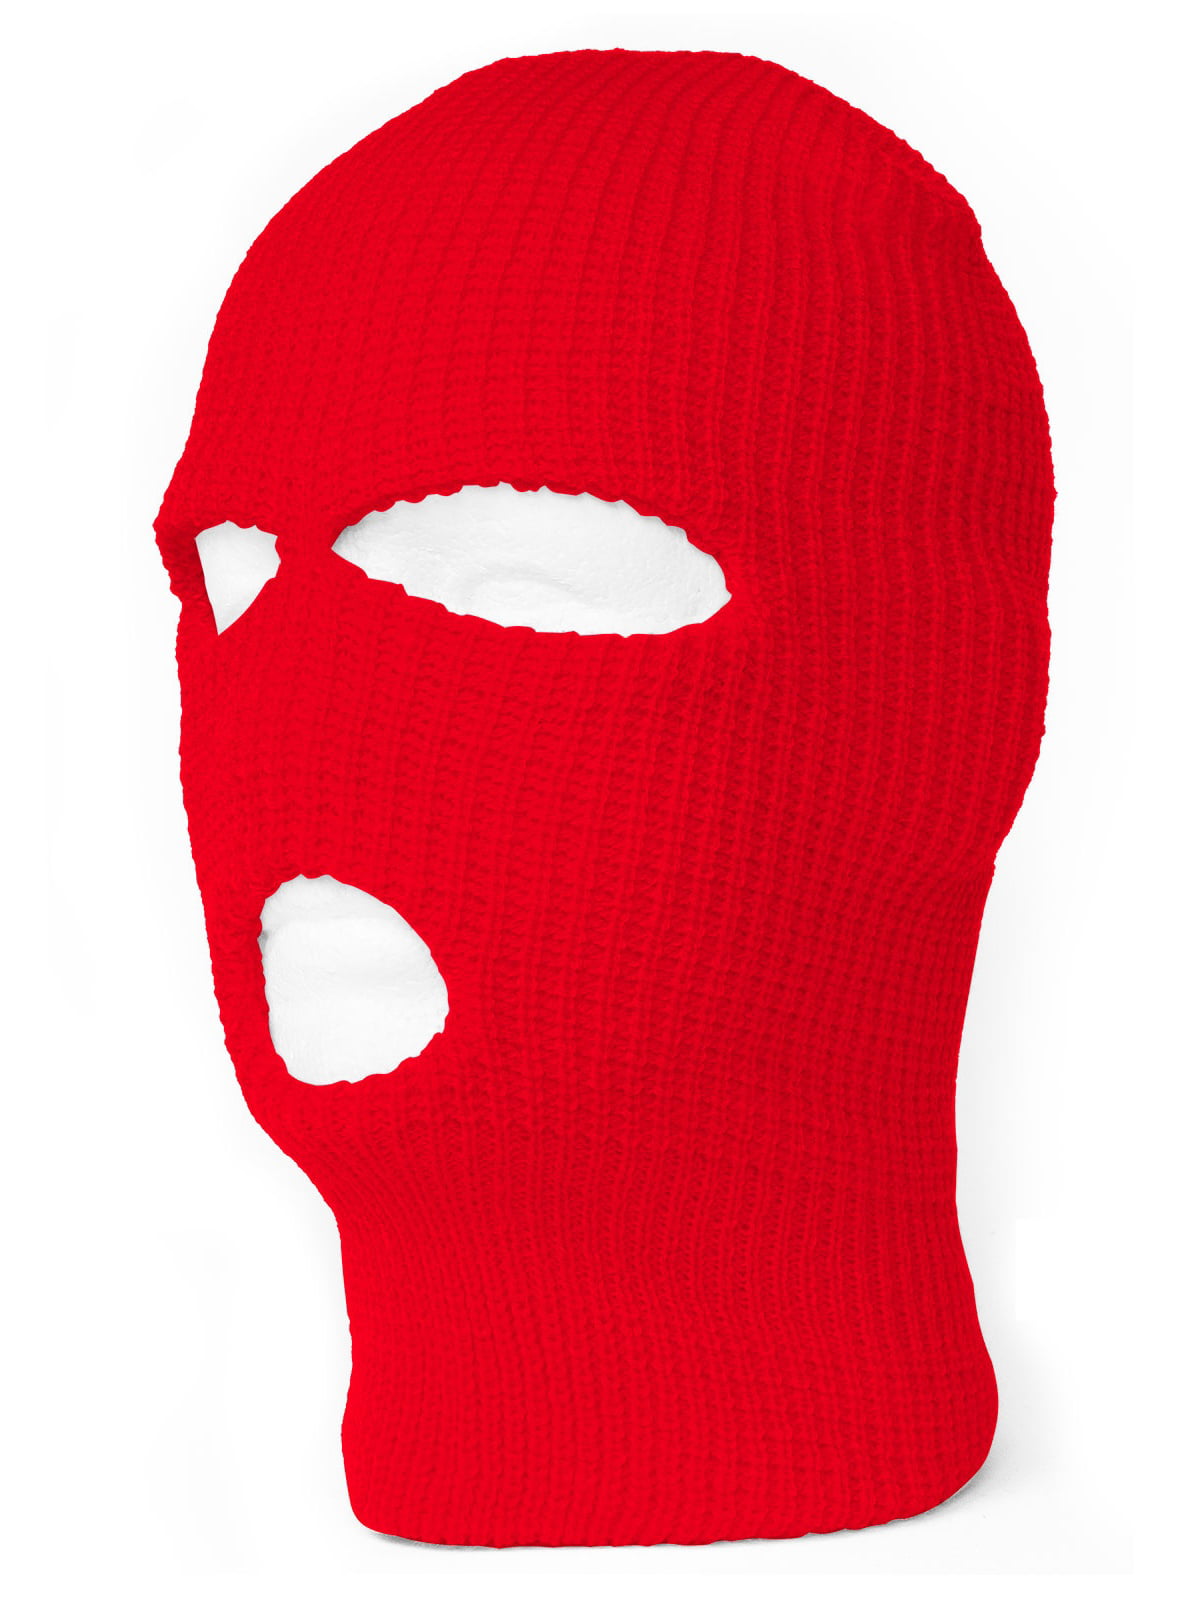 TopHeadwear's 3 Hole Face Ski Mask, Red - Walmart.com